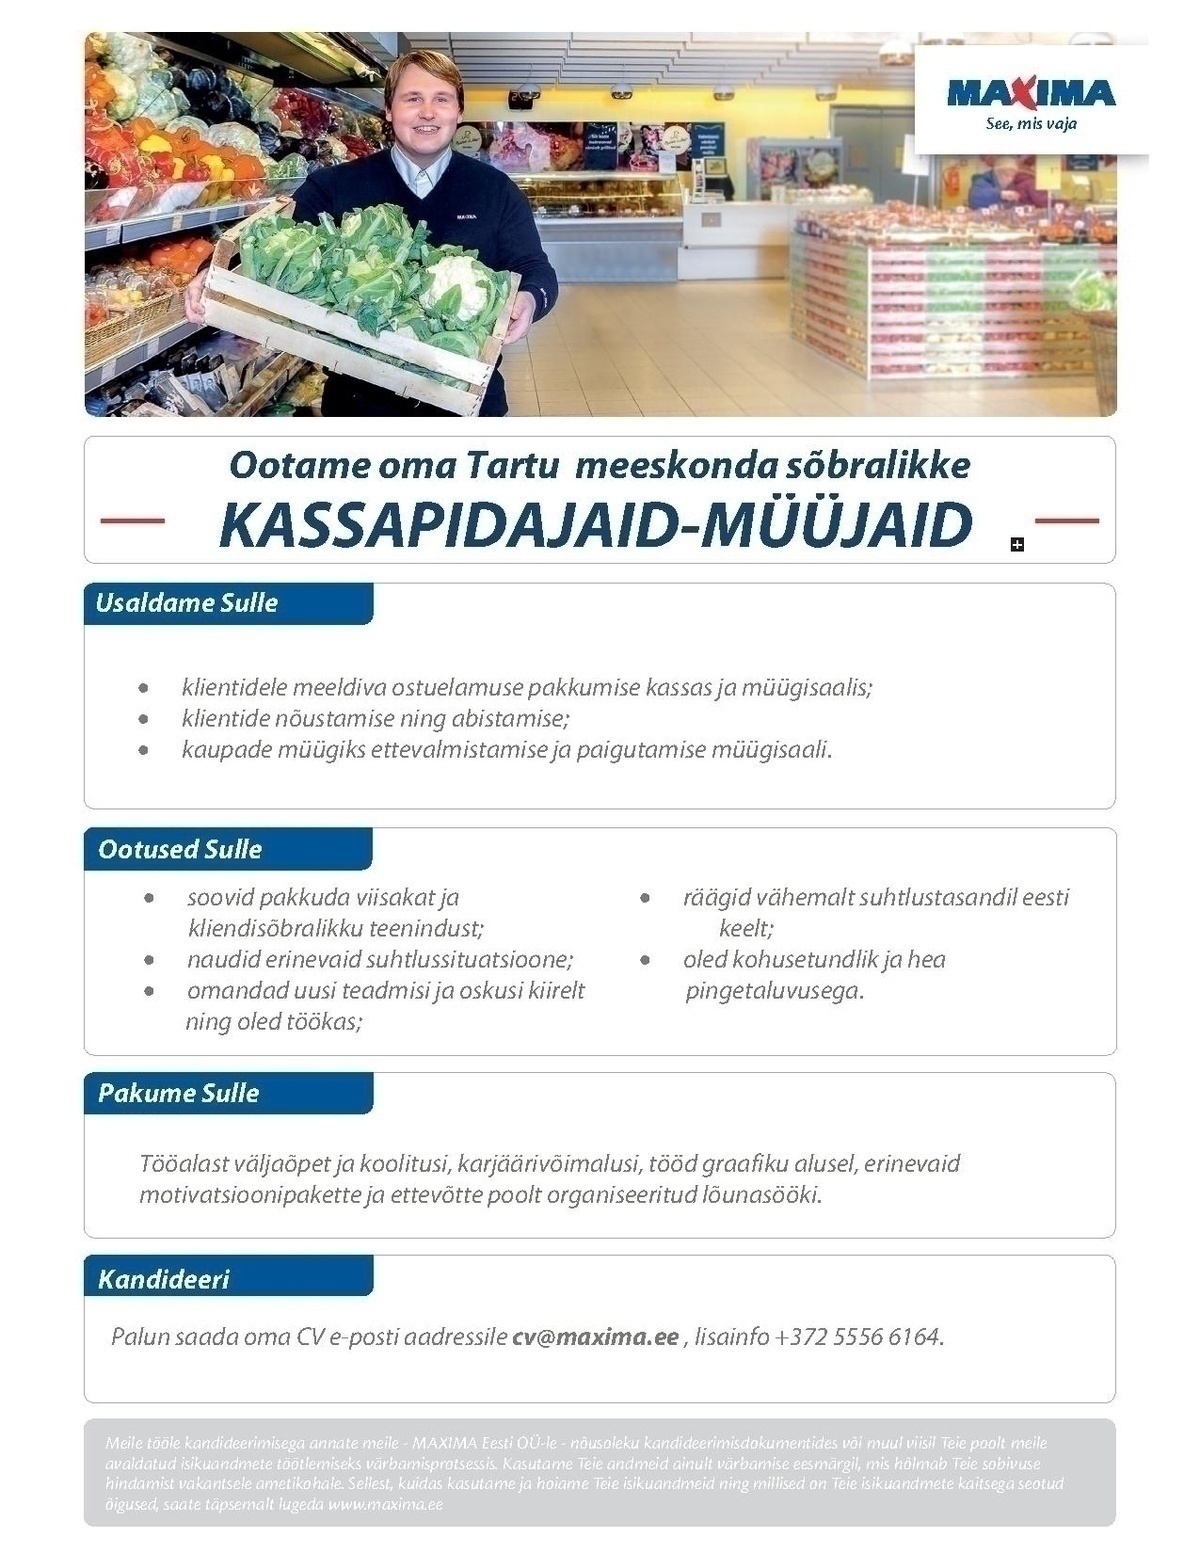 Maxima Eesti OÜ Kassapidaja-müüja Tartu Maximas (Narva mnt 112)